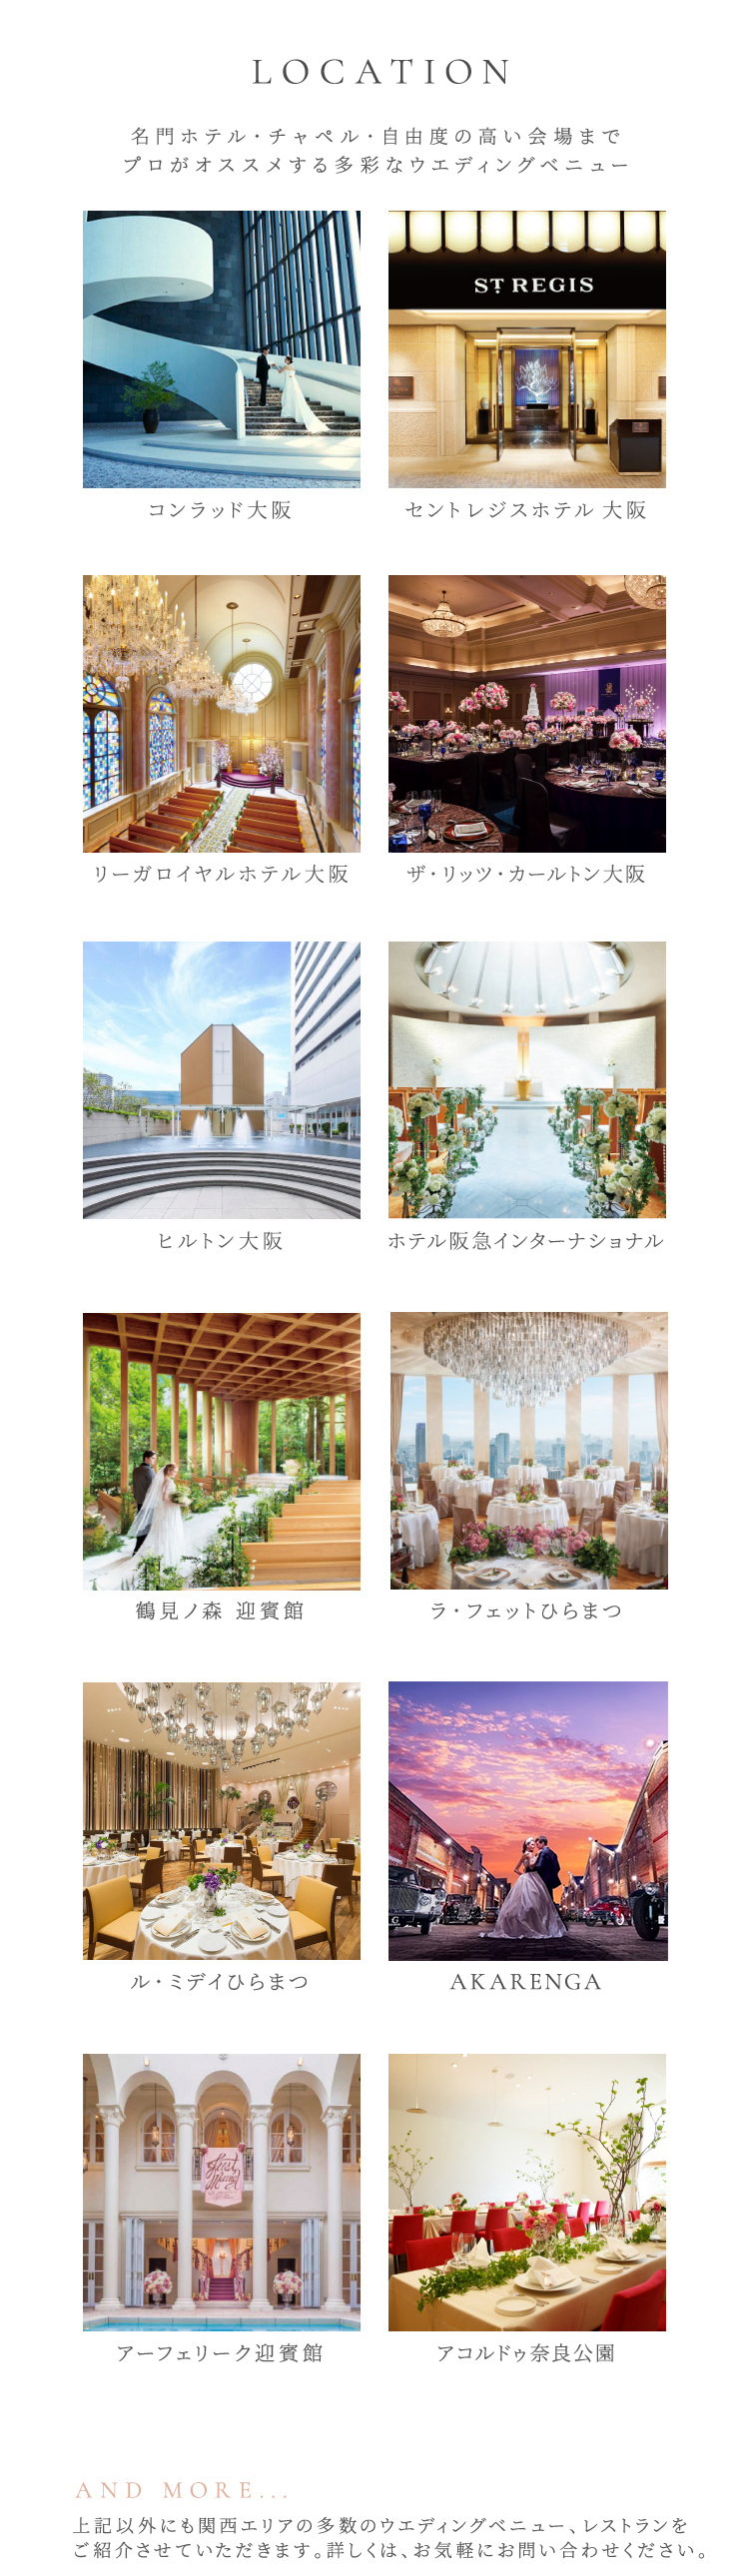 TAKAMI BRIDAL WEDDING DESK OSAKAのロケーション スマートフォン用の画像